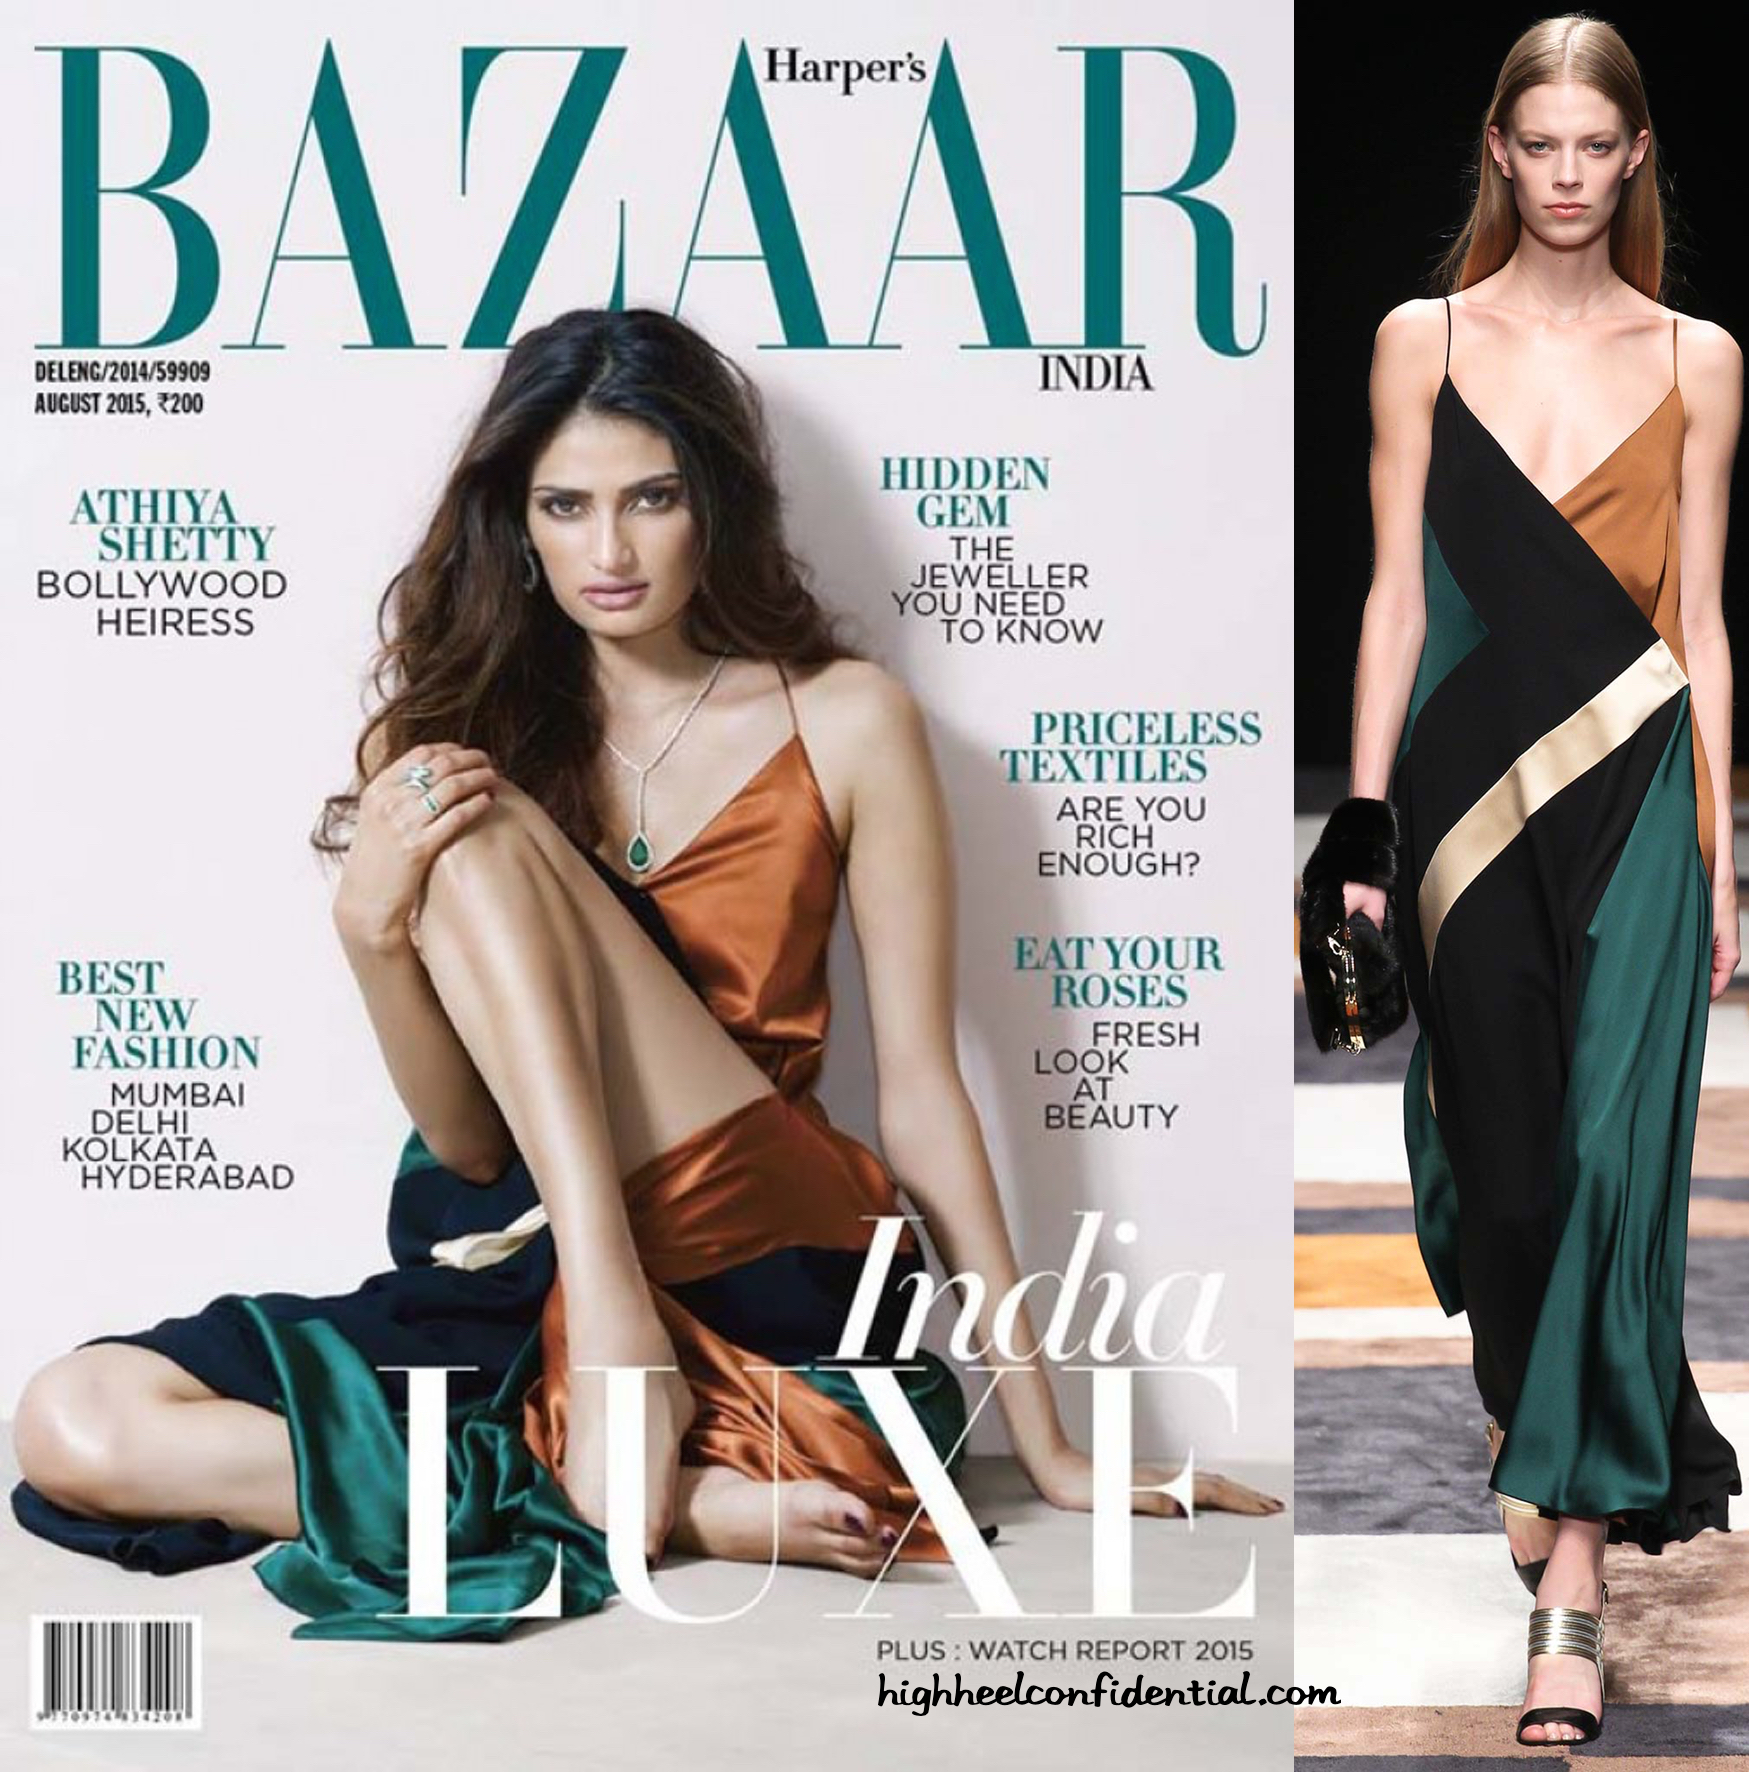 Archana on Bazaar: (Un)Covered - High Heel Confidential